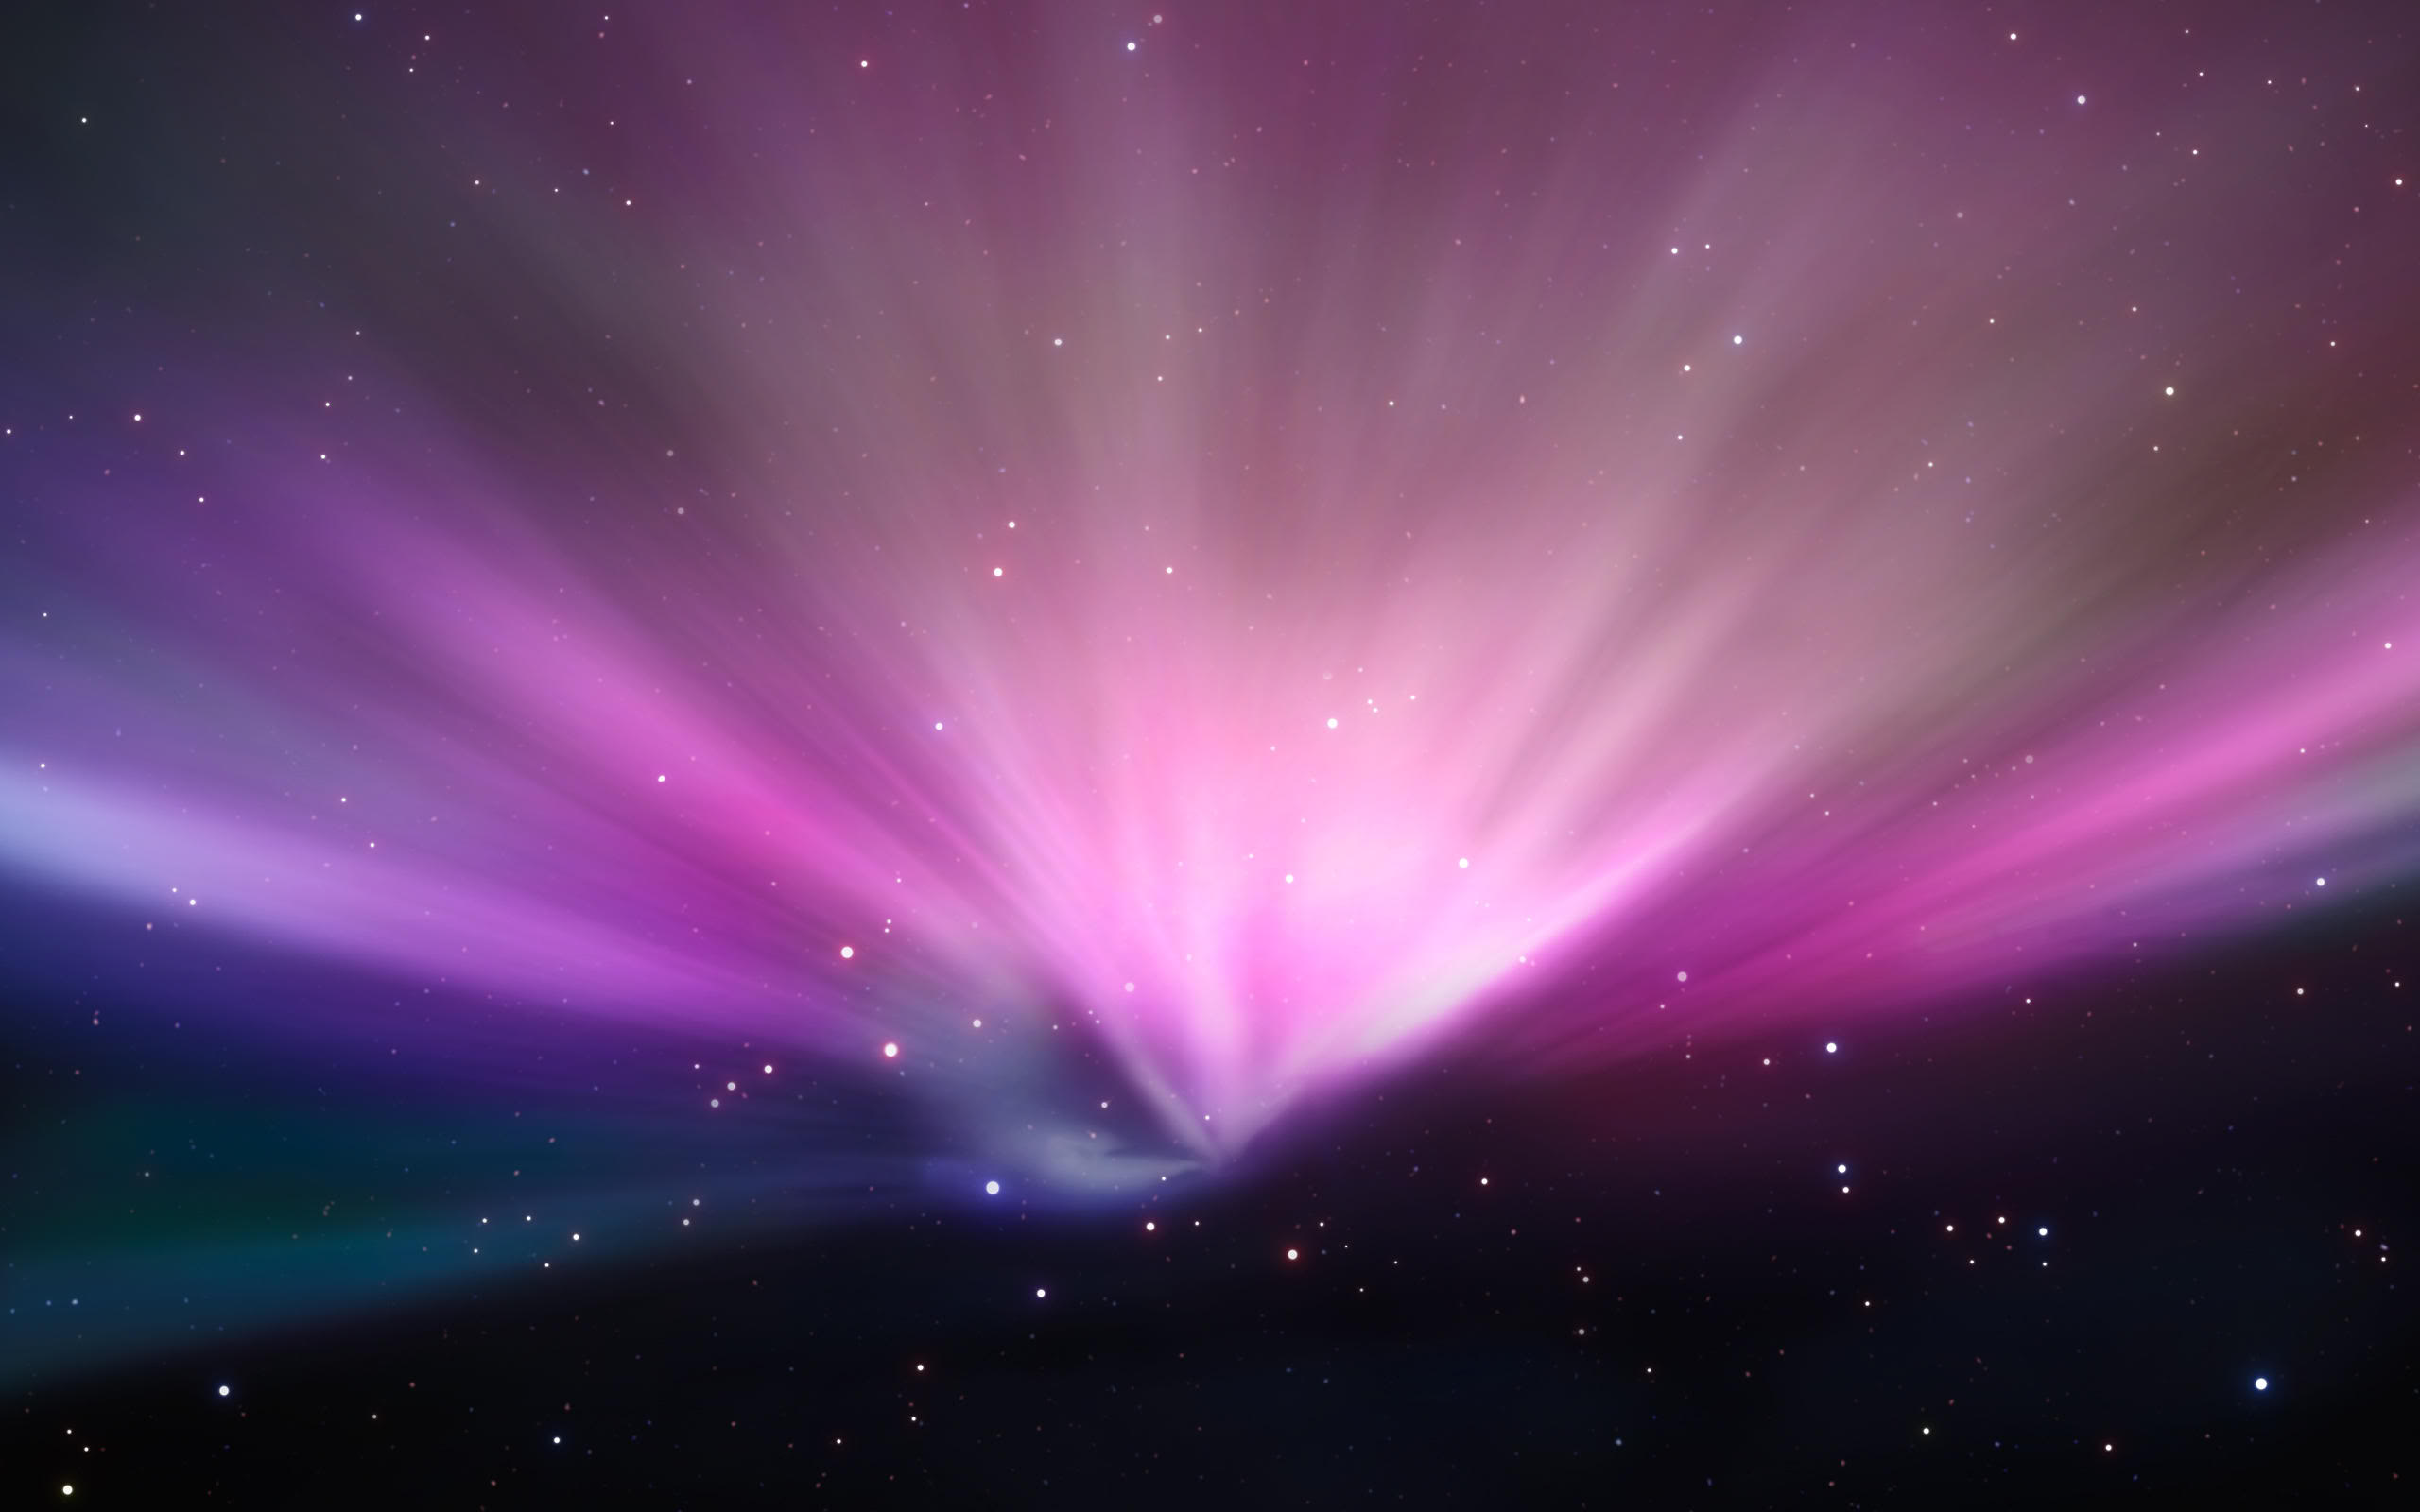 outer space, stars, aurora borealis - desktop wallpaper